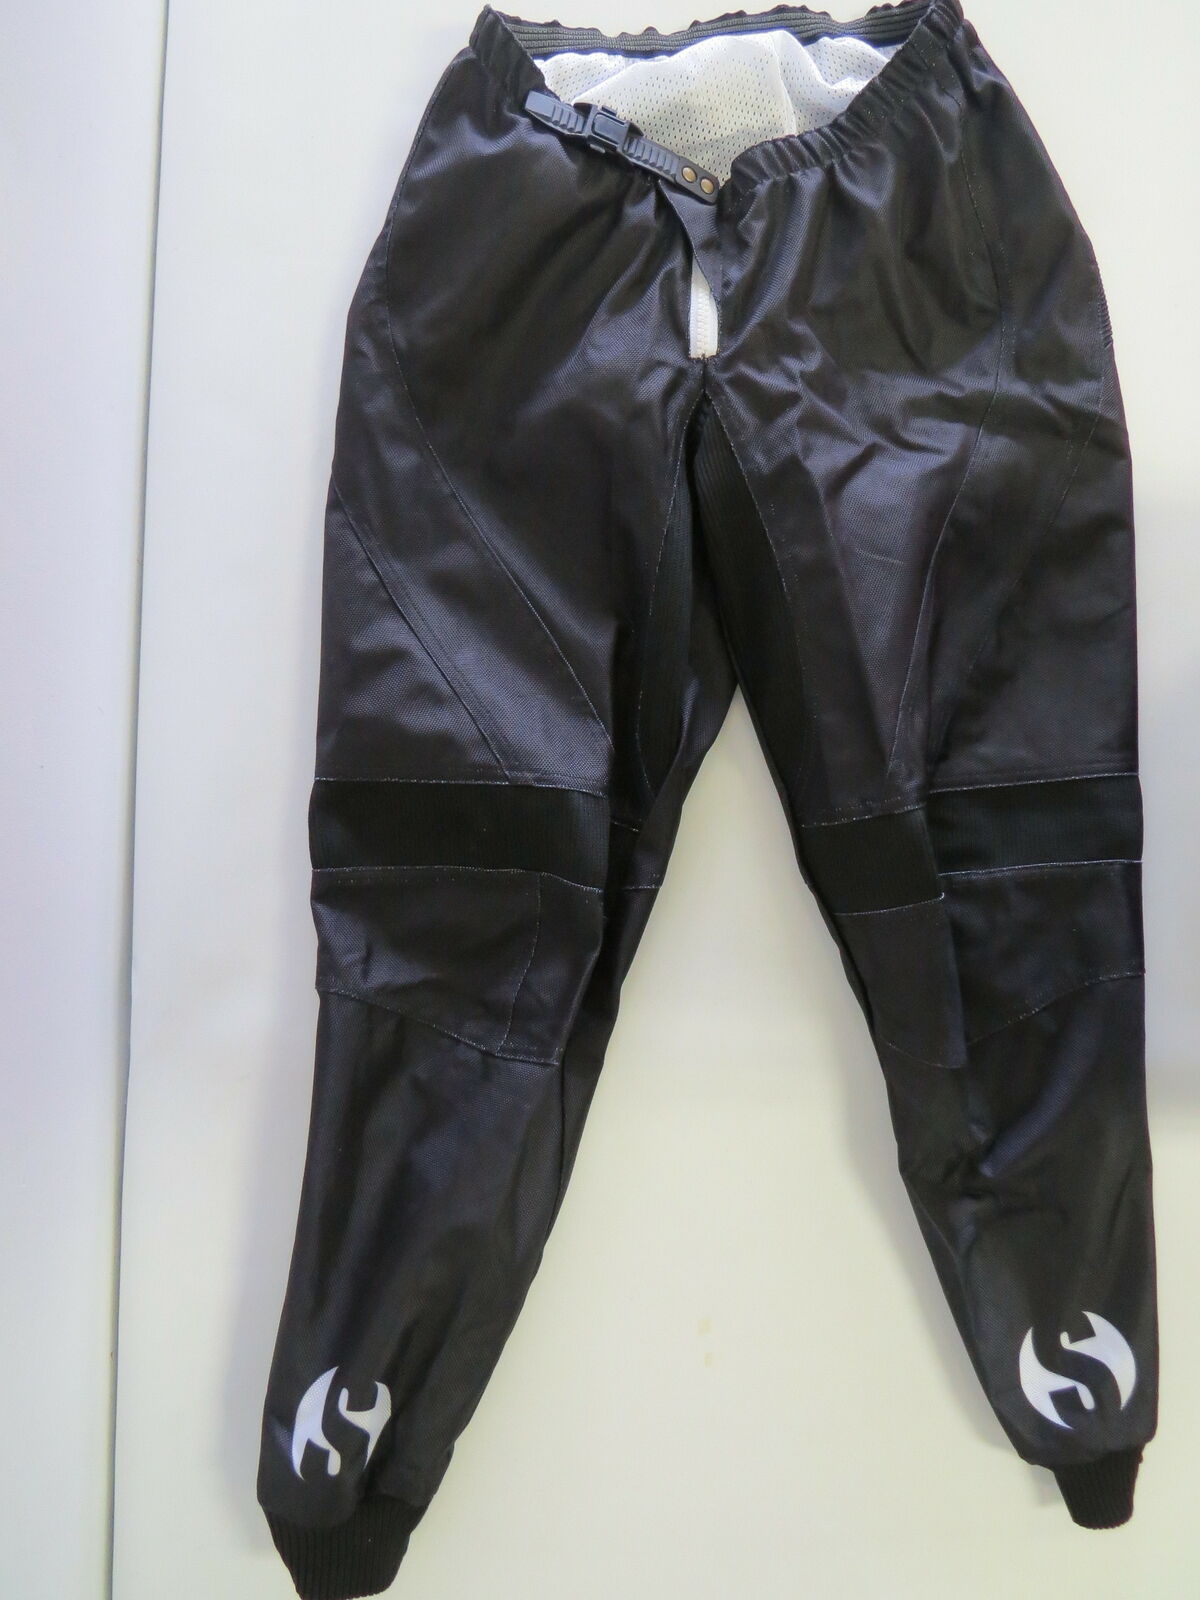 Sommerville Medium Sports BMX Black Waistband New Free Shipping Omaha Mall Pants Adjustable